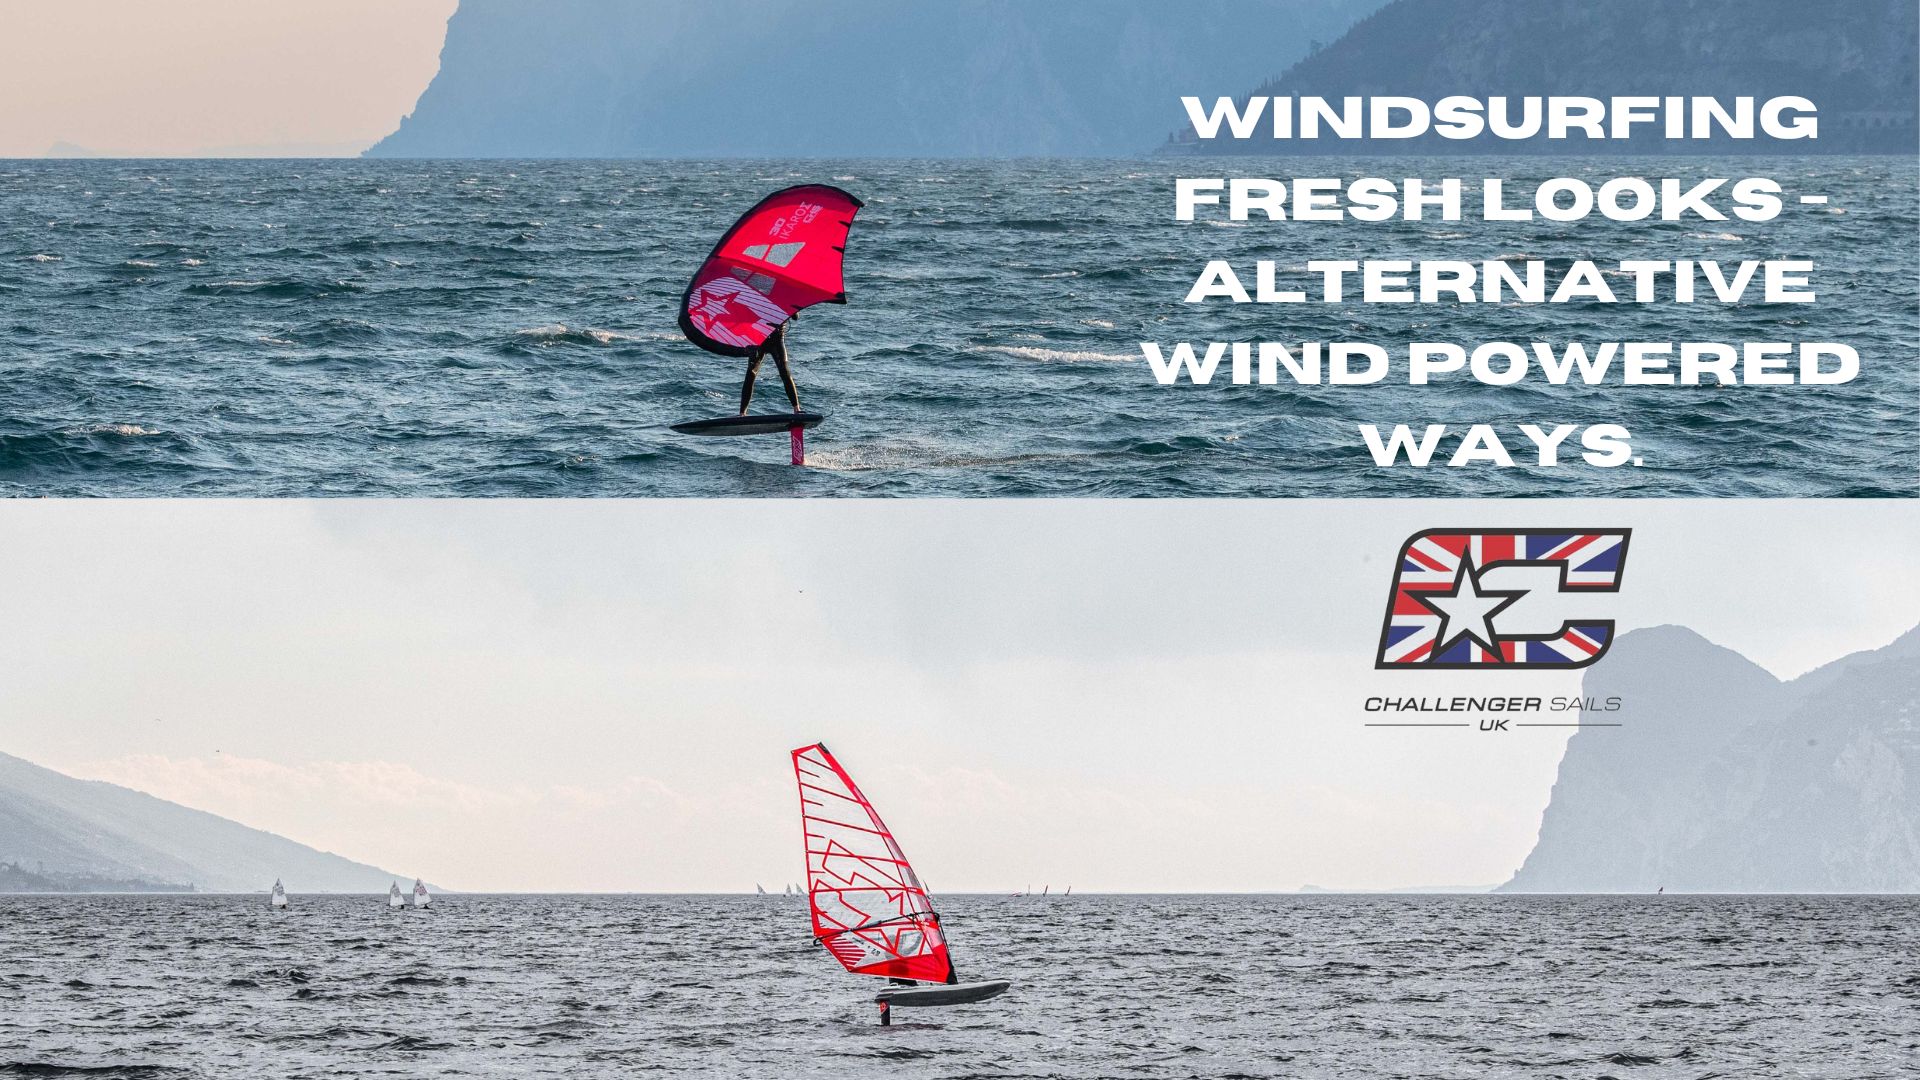 Windsurfing fresh looks – alternative wind powered ways.